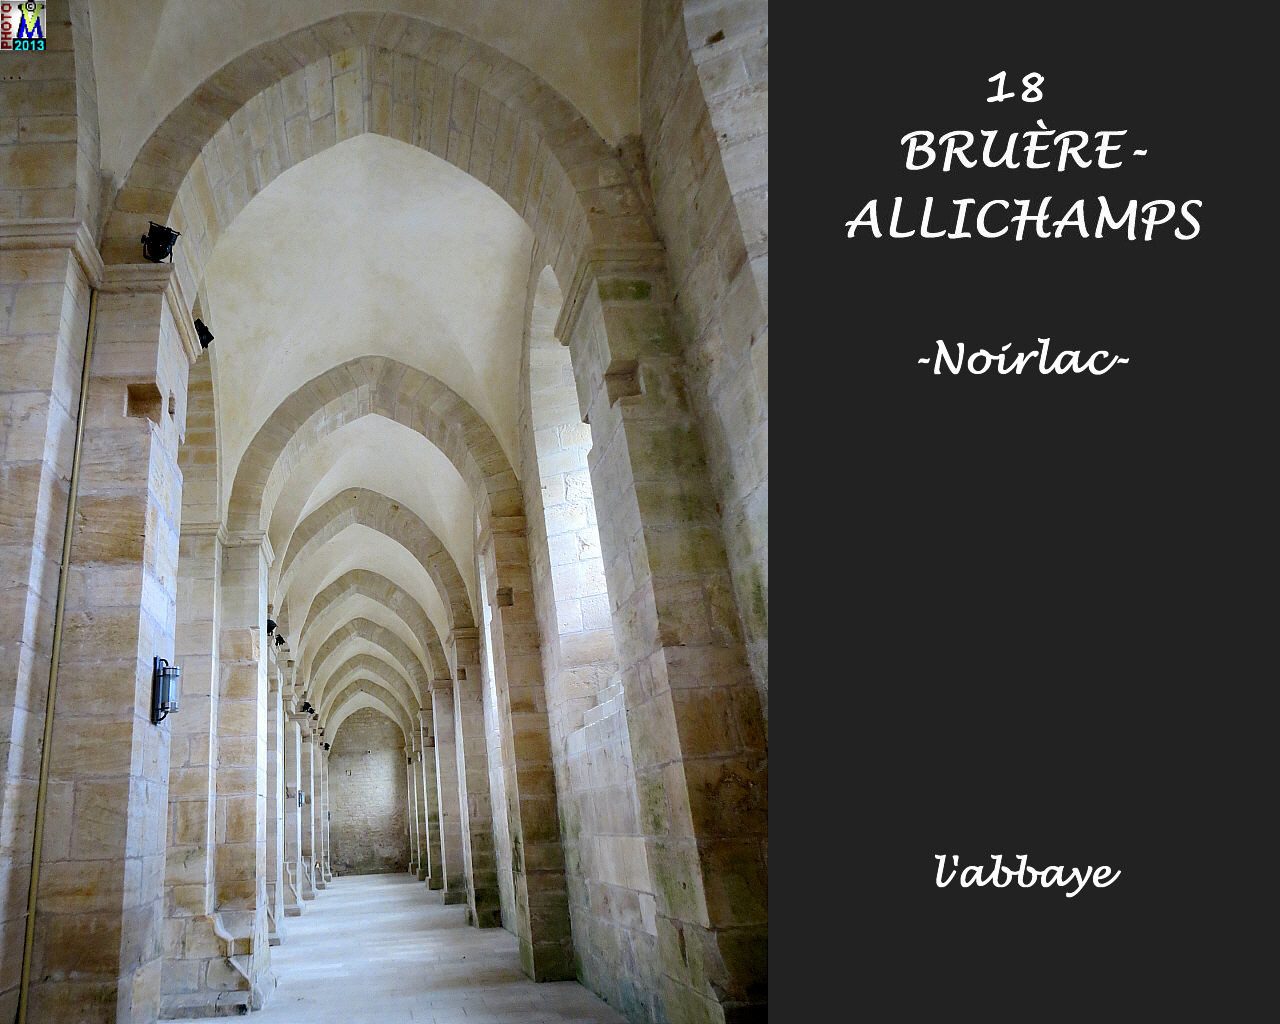 18BRUERE-ALLICHAMPSzNOIRLAC_abbaye_254.jpg